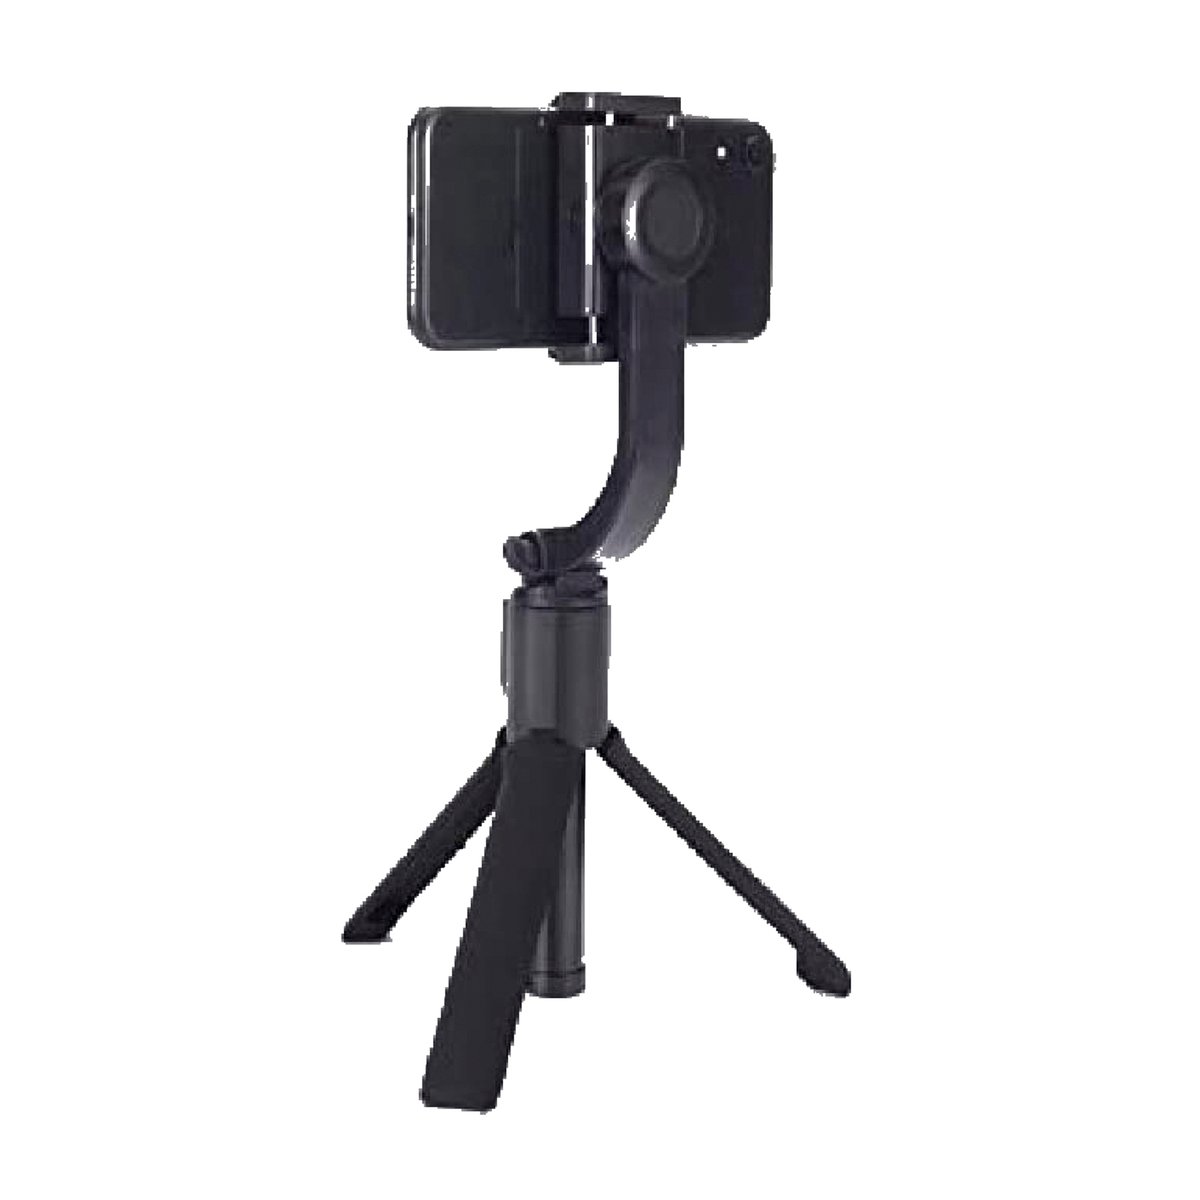 Trands Gimbal Mobile Phone Handheld Stabilizer Anti-Shake Extendable Tripod H5, Black